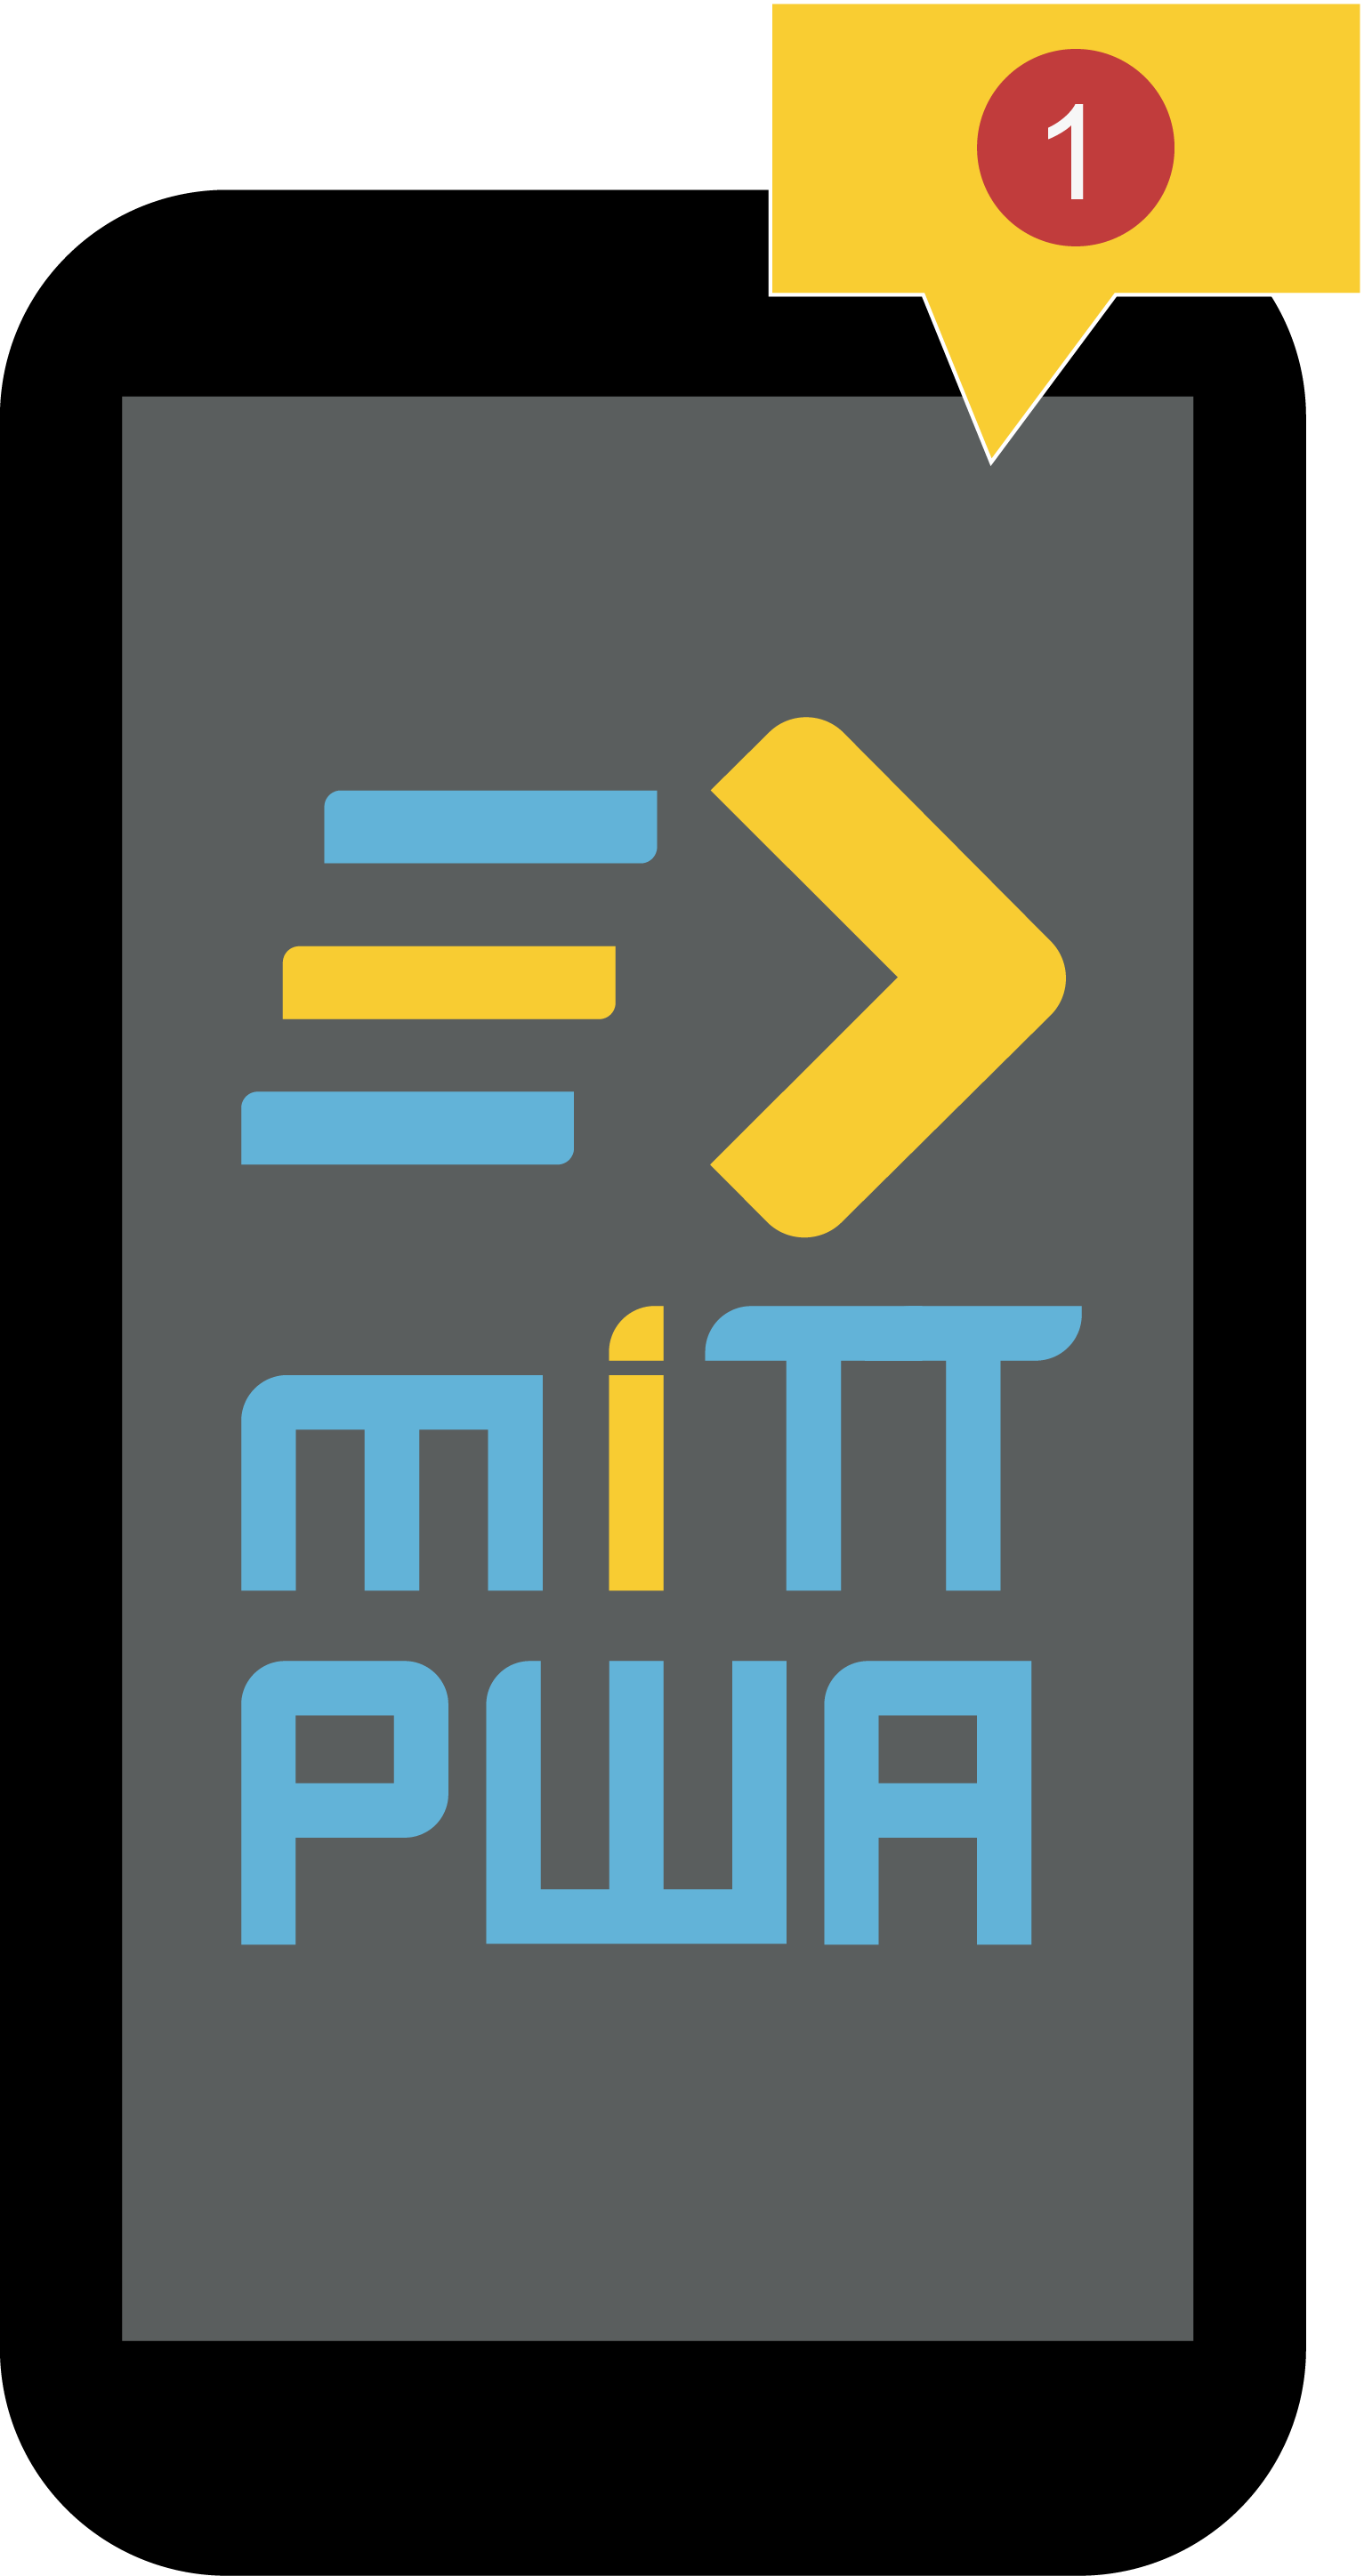 miTT PWA (Progressive Web App)